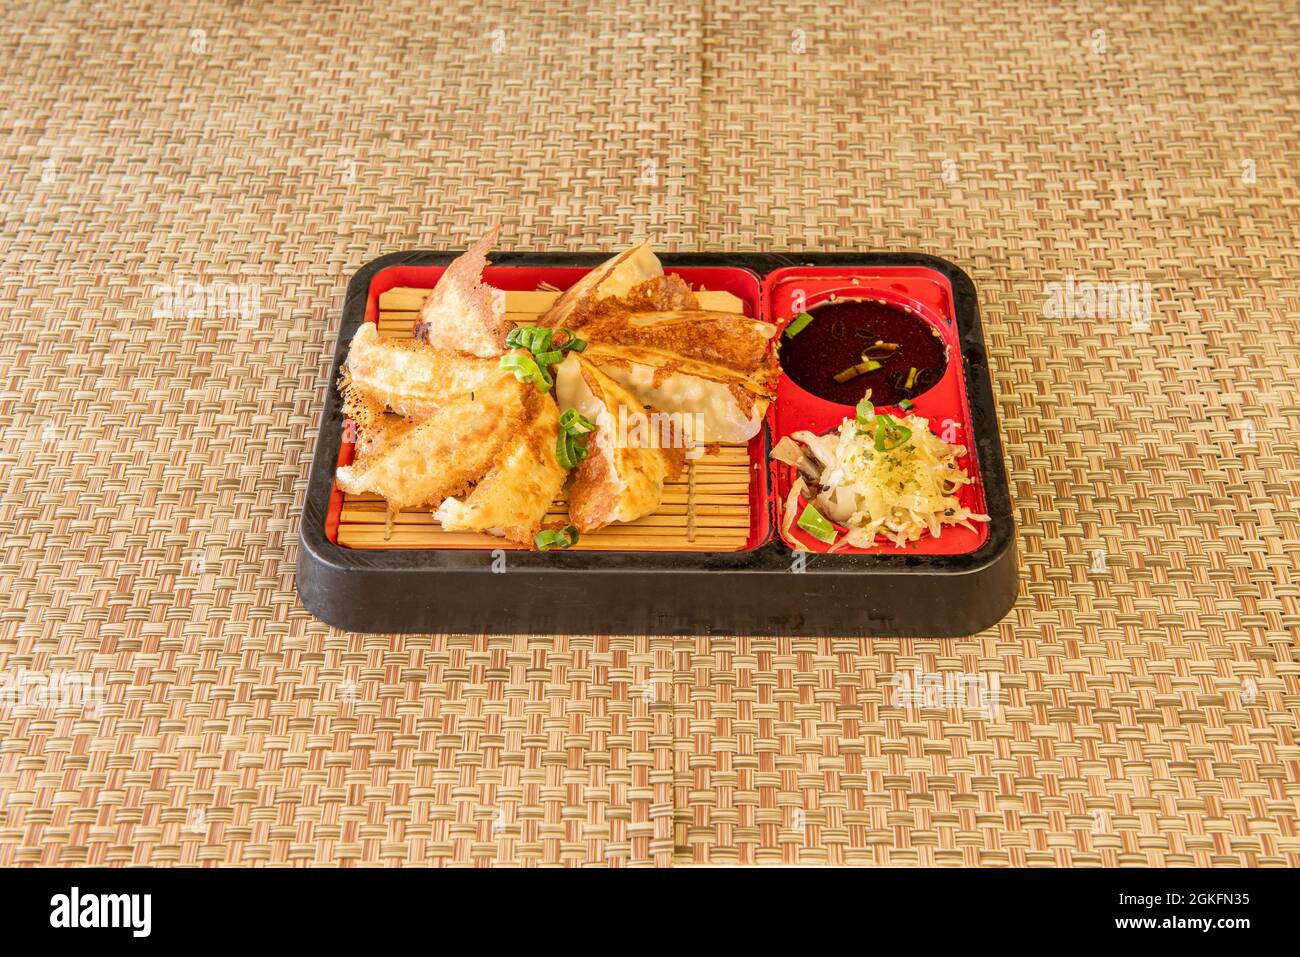 Menu giapponese di gnocchi di gyoza alla griglia, salsa di soia e verdure laterali su triumi di vimini Foto Stock